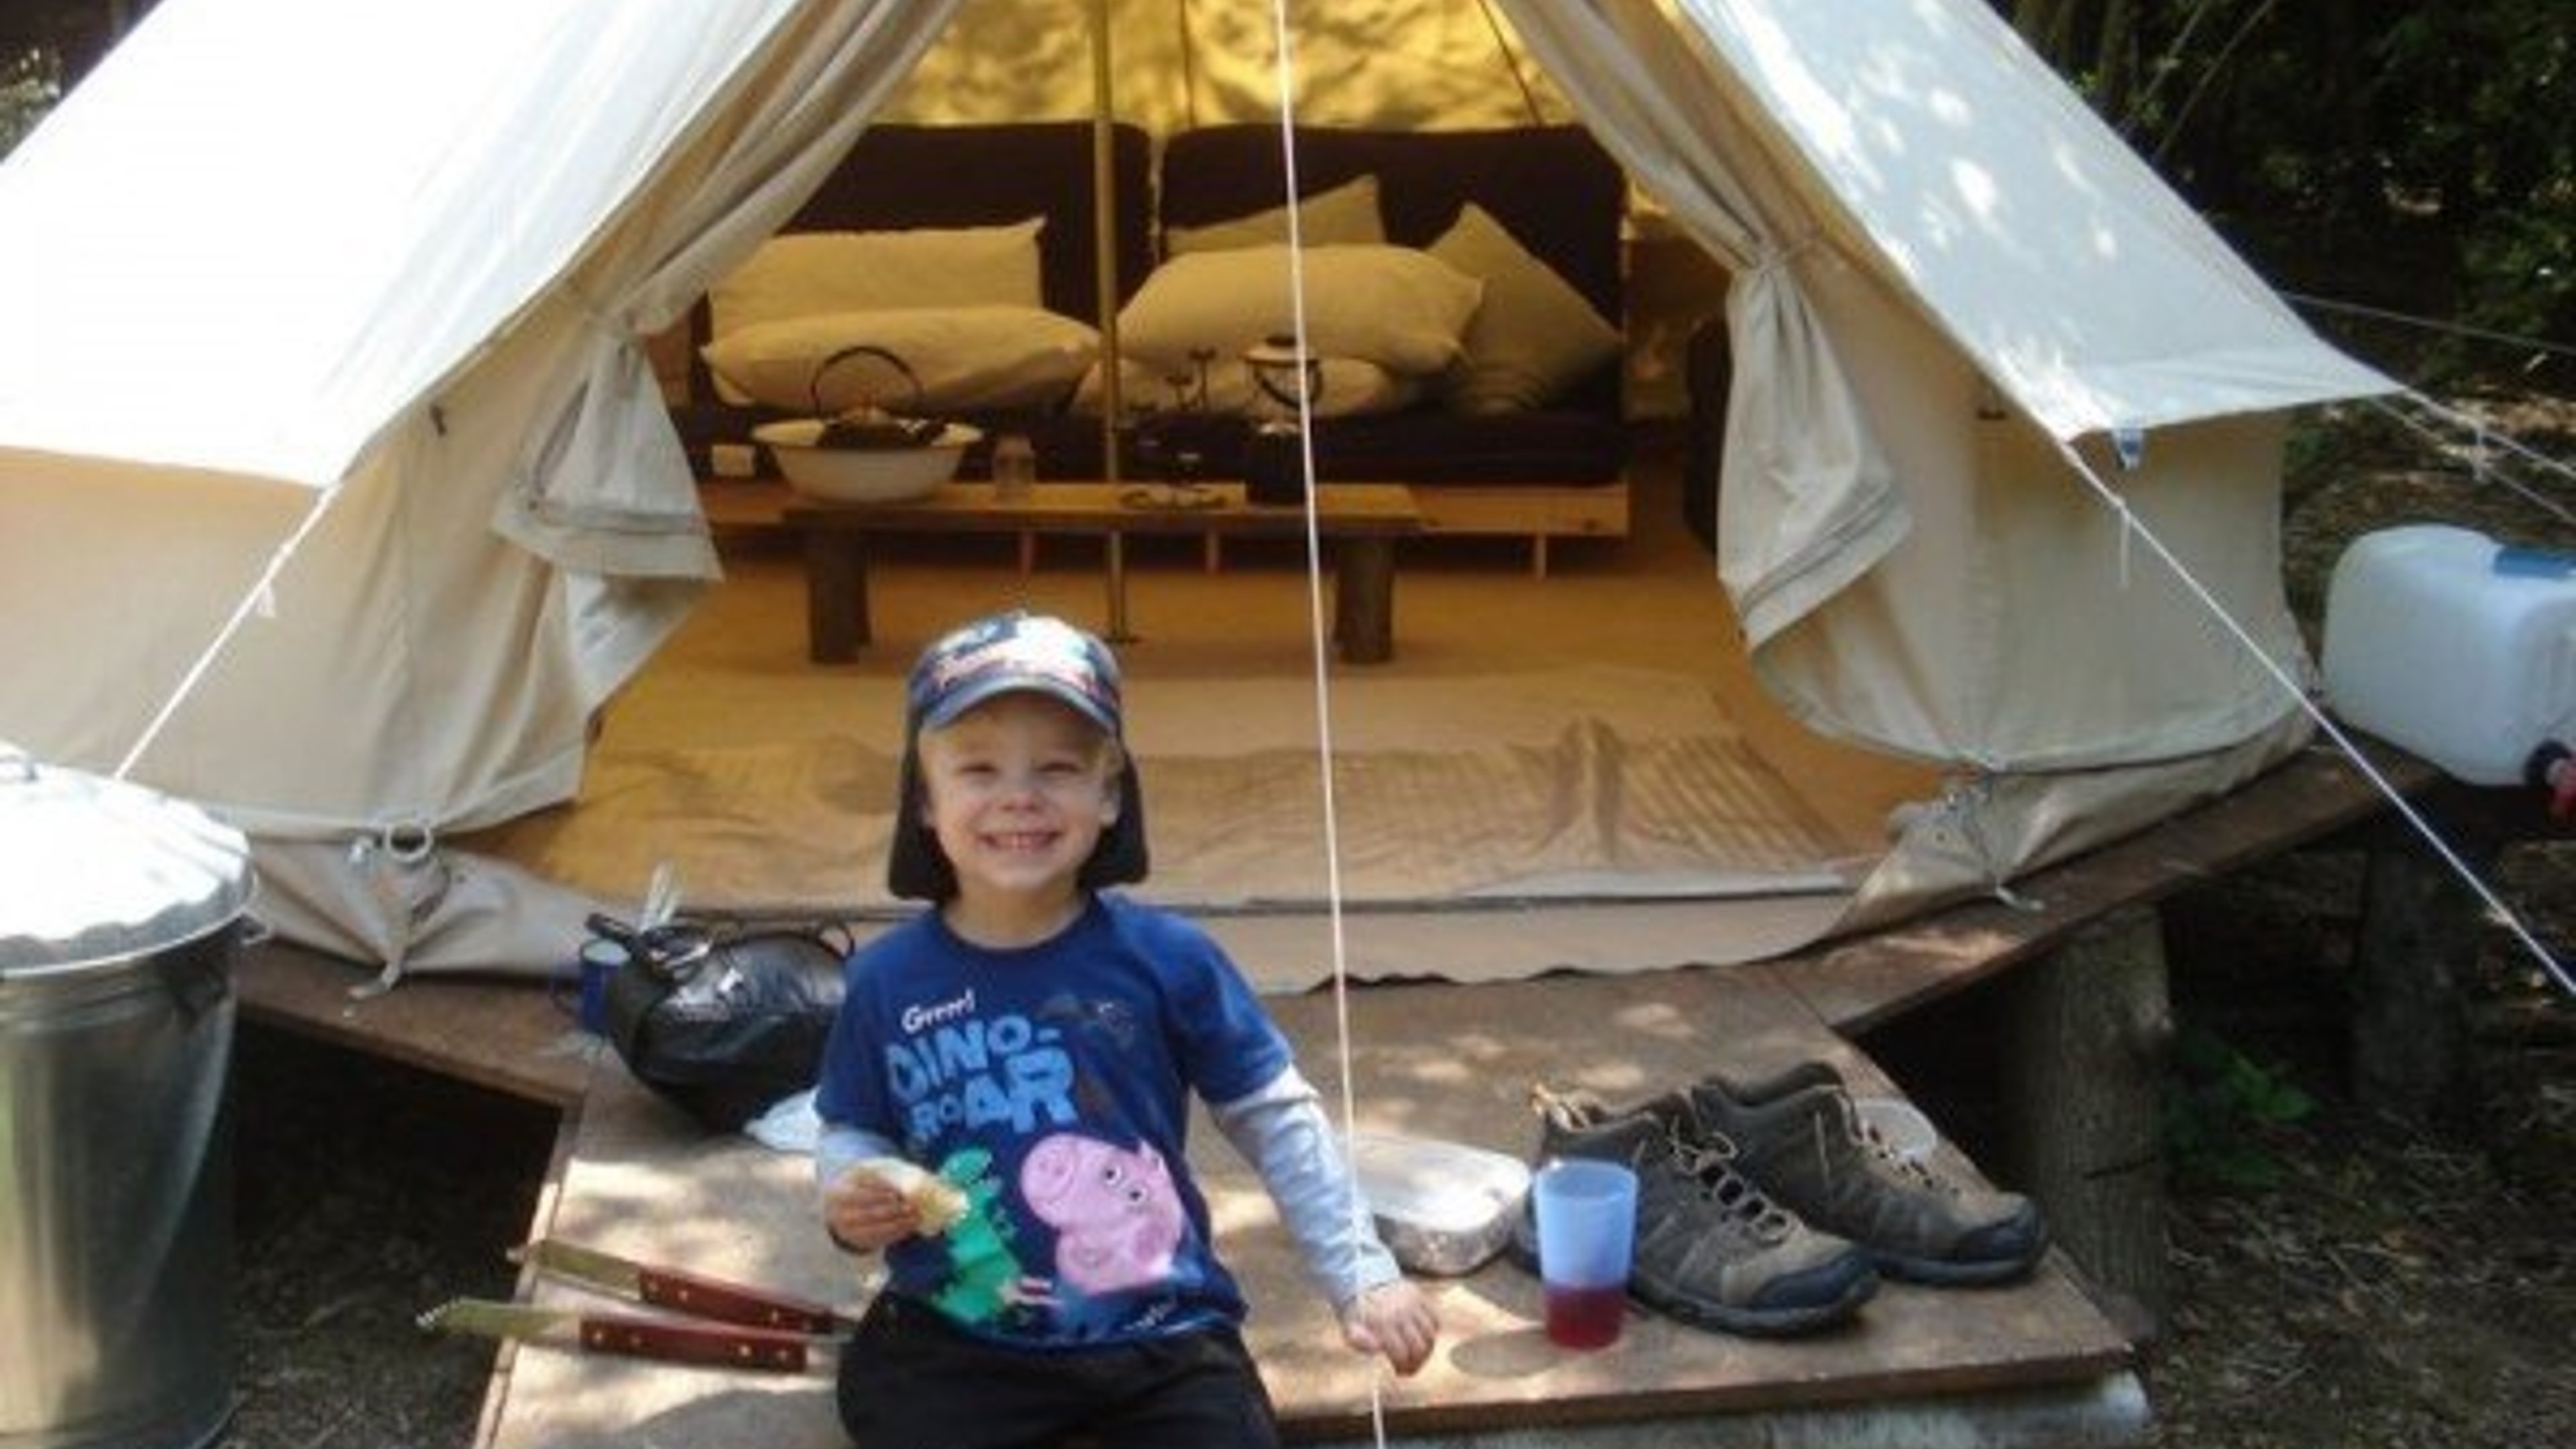 Eco Camp UK - Wild Boar Wood Campsite